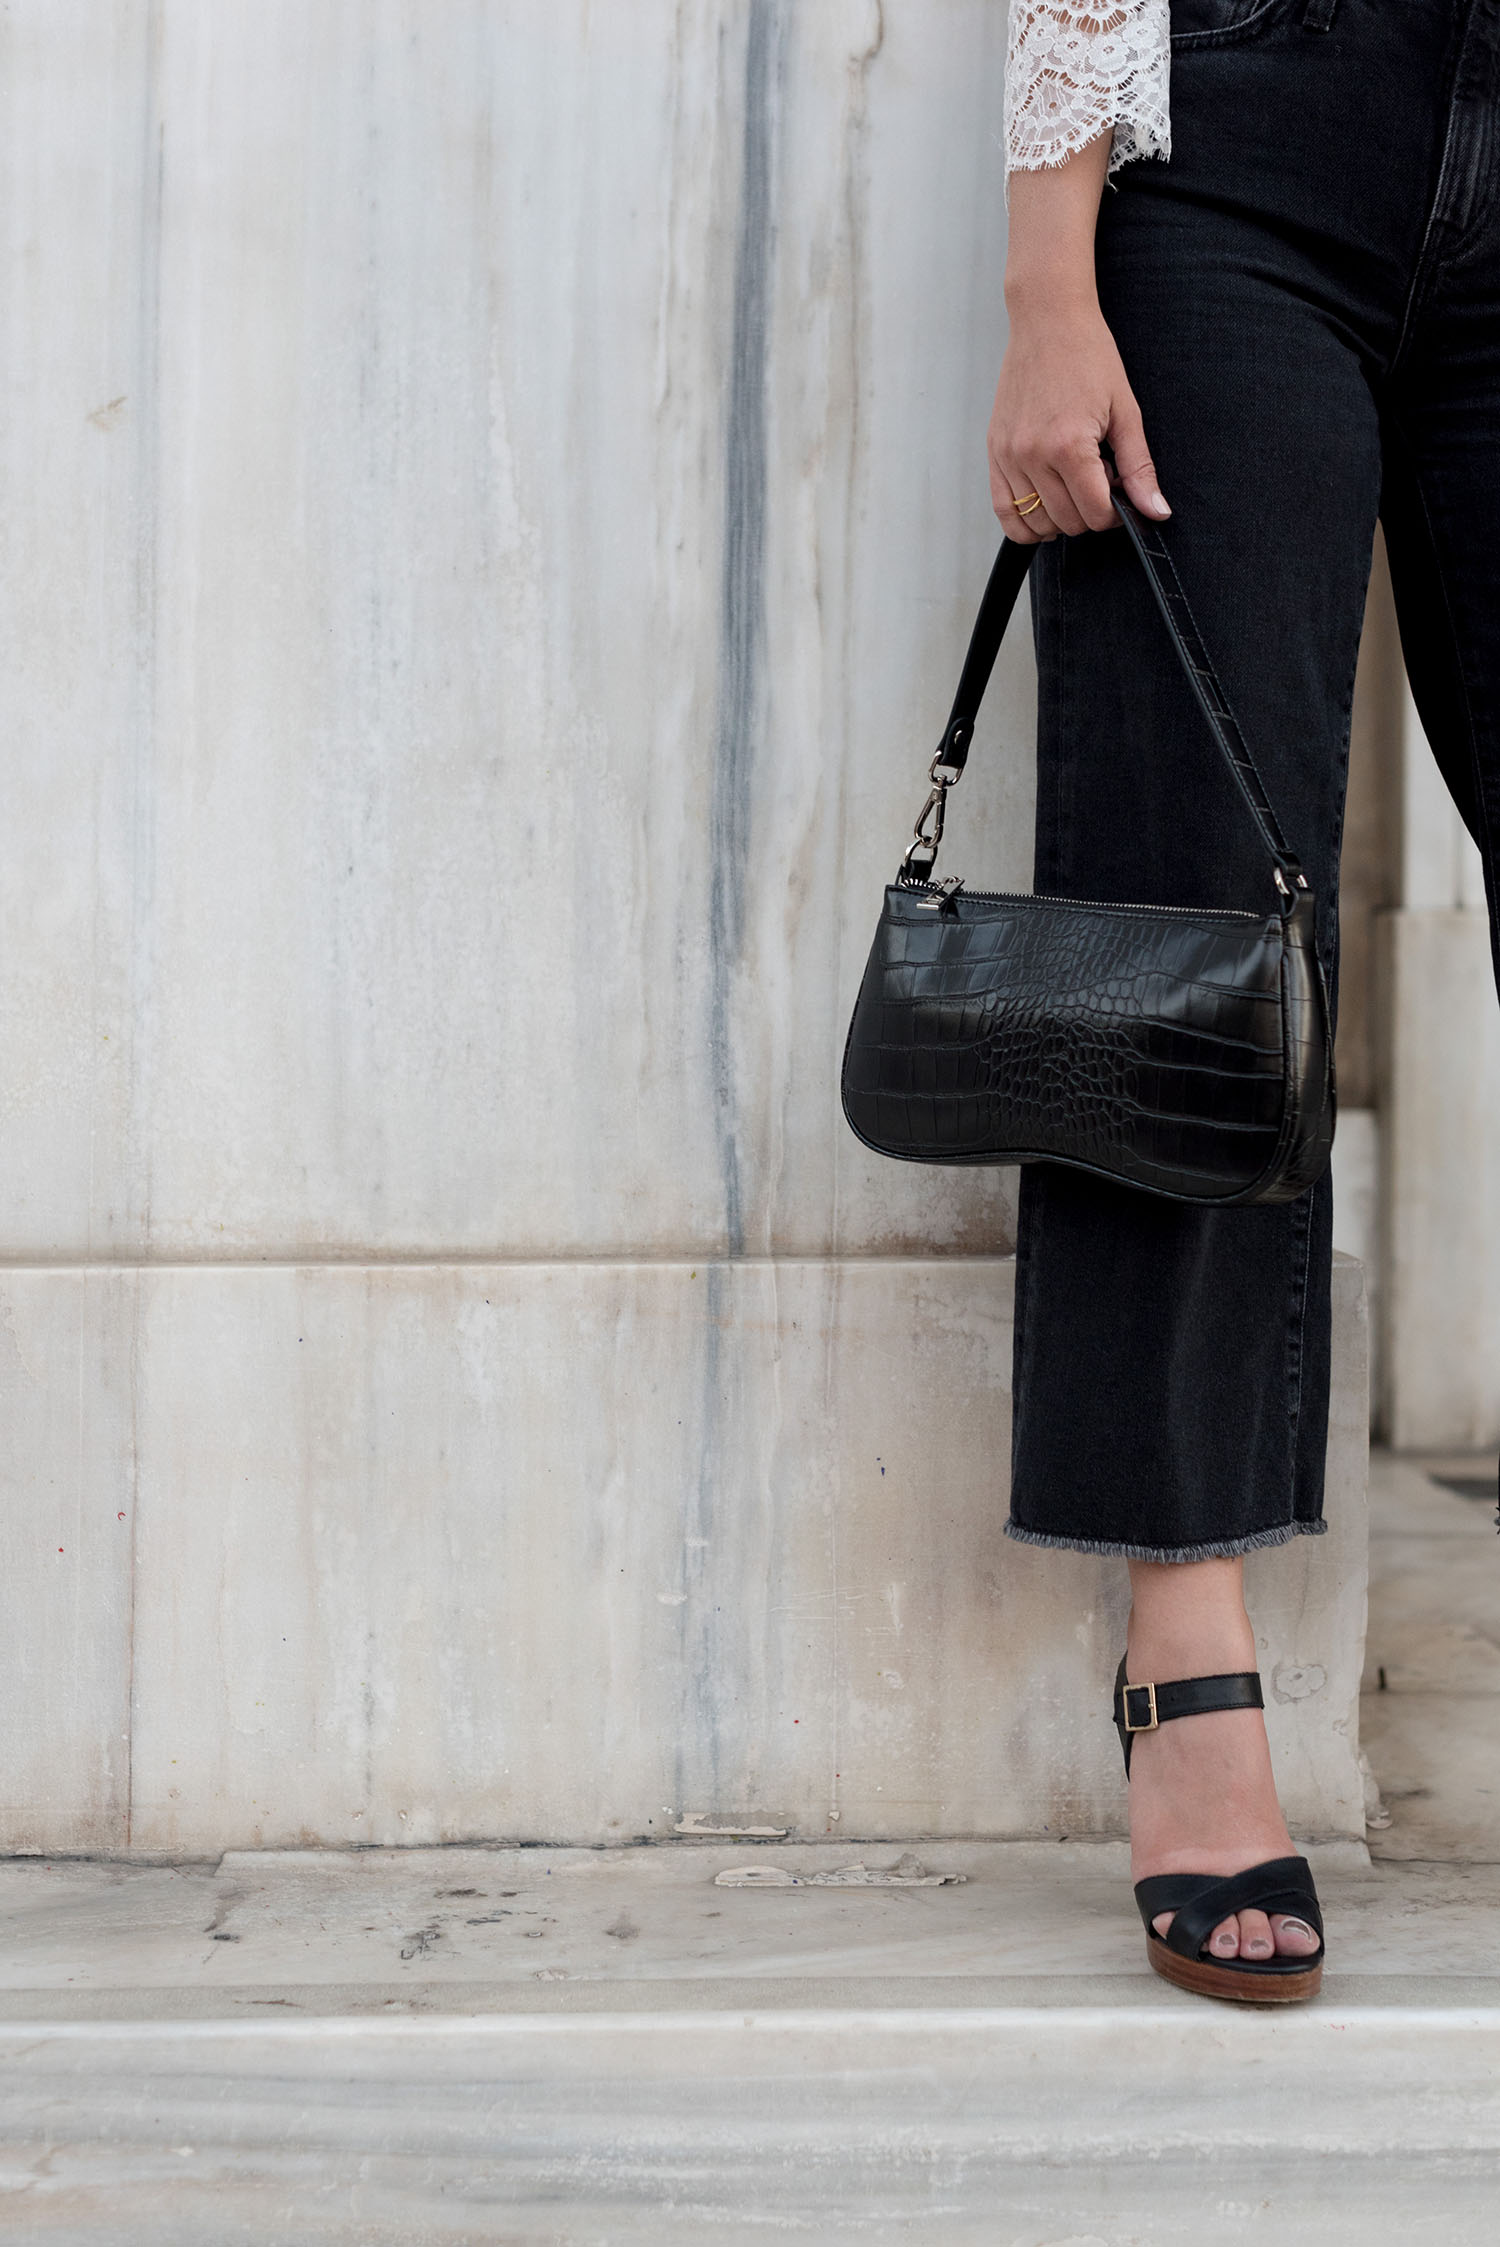 Coco & Vera - Friday by JW Pei handbag, Mavi cropped jeans, Le Chateau sandals